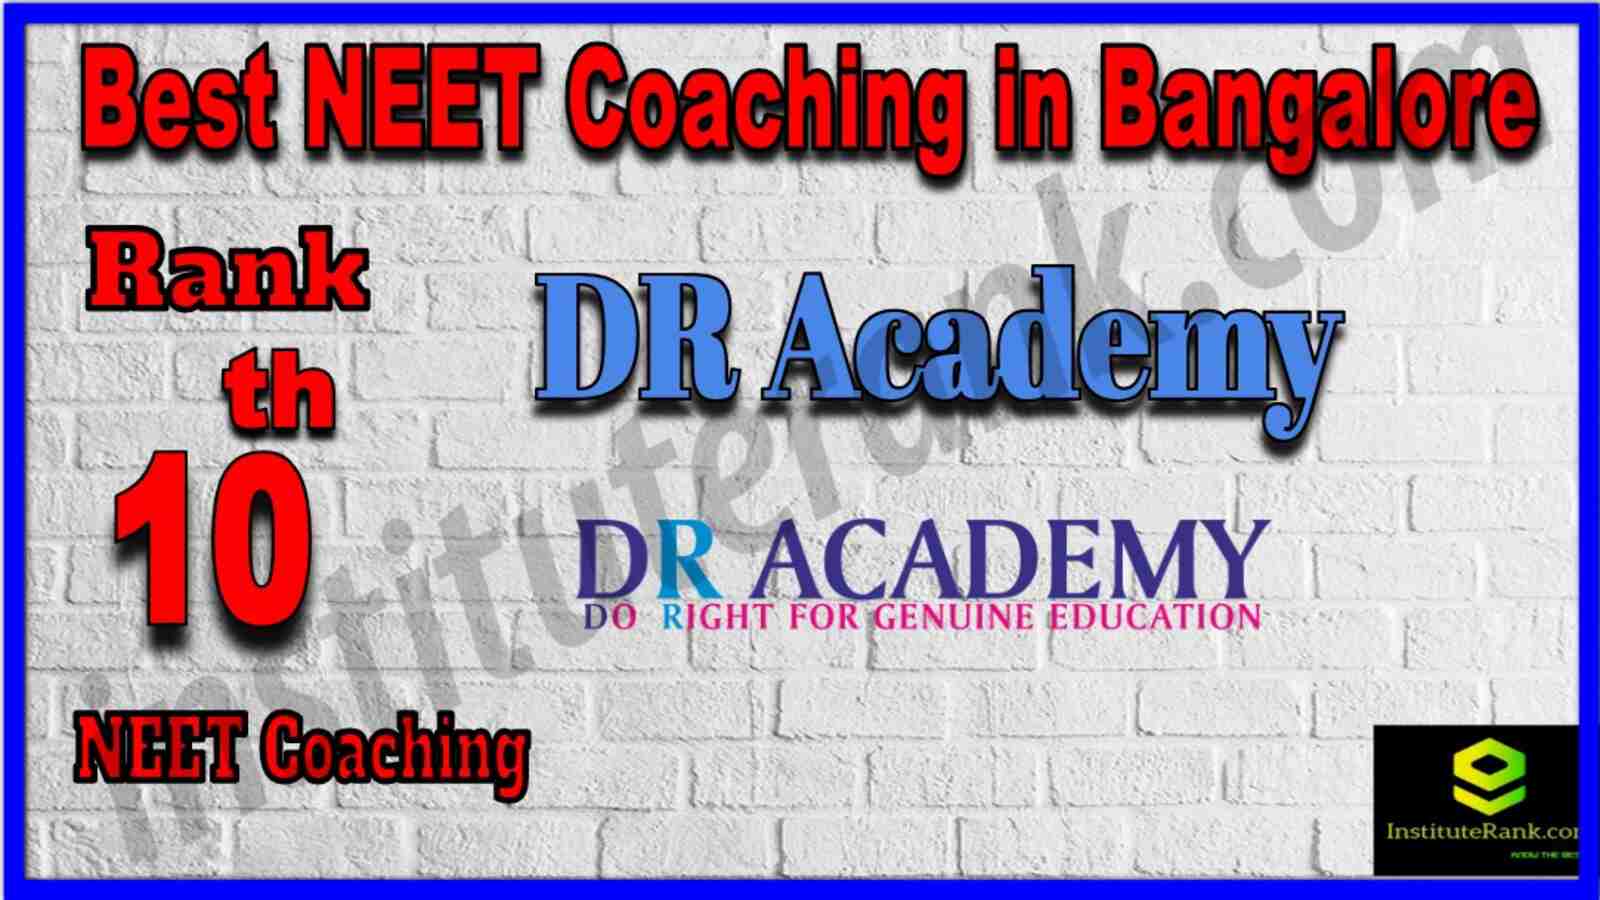 Rank 10 Best NEET Coaching in Bangalore